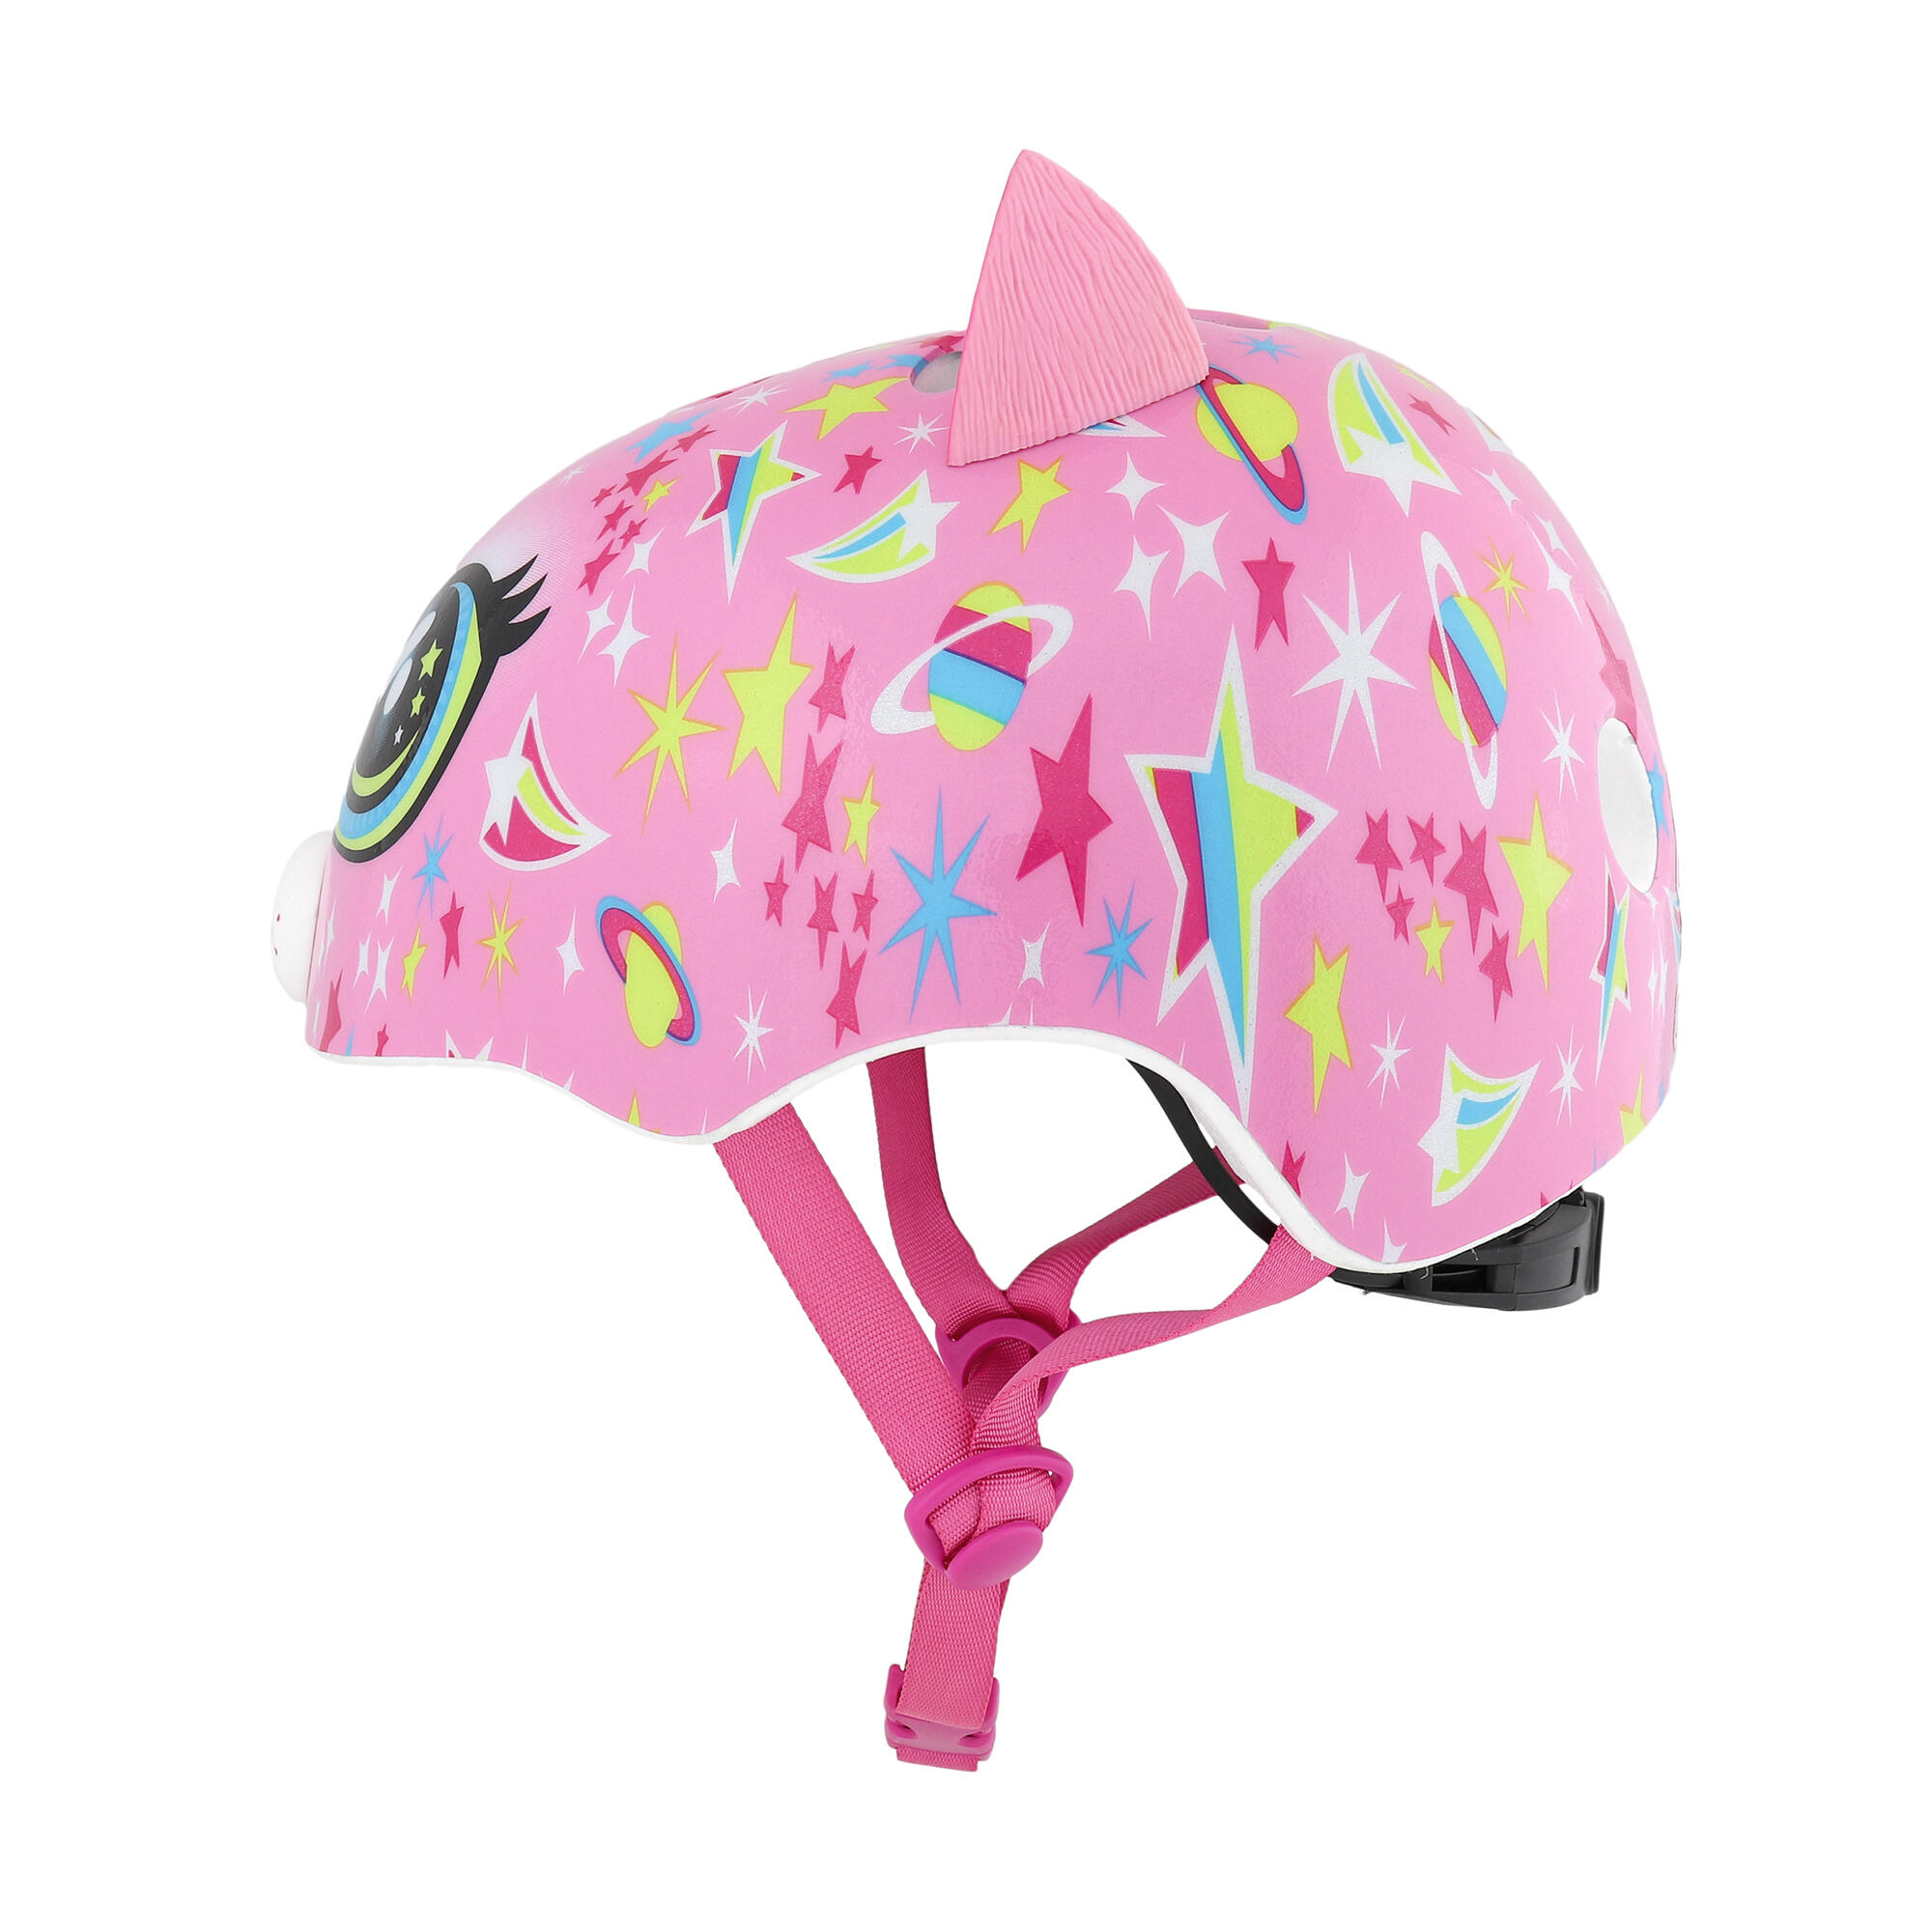 Raskullz FS Toddlers Helmet - Astro Cat Pink Astro Cat Pink Unisize 48-52cm 2/5